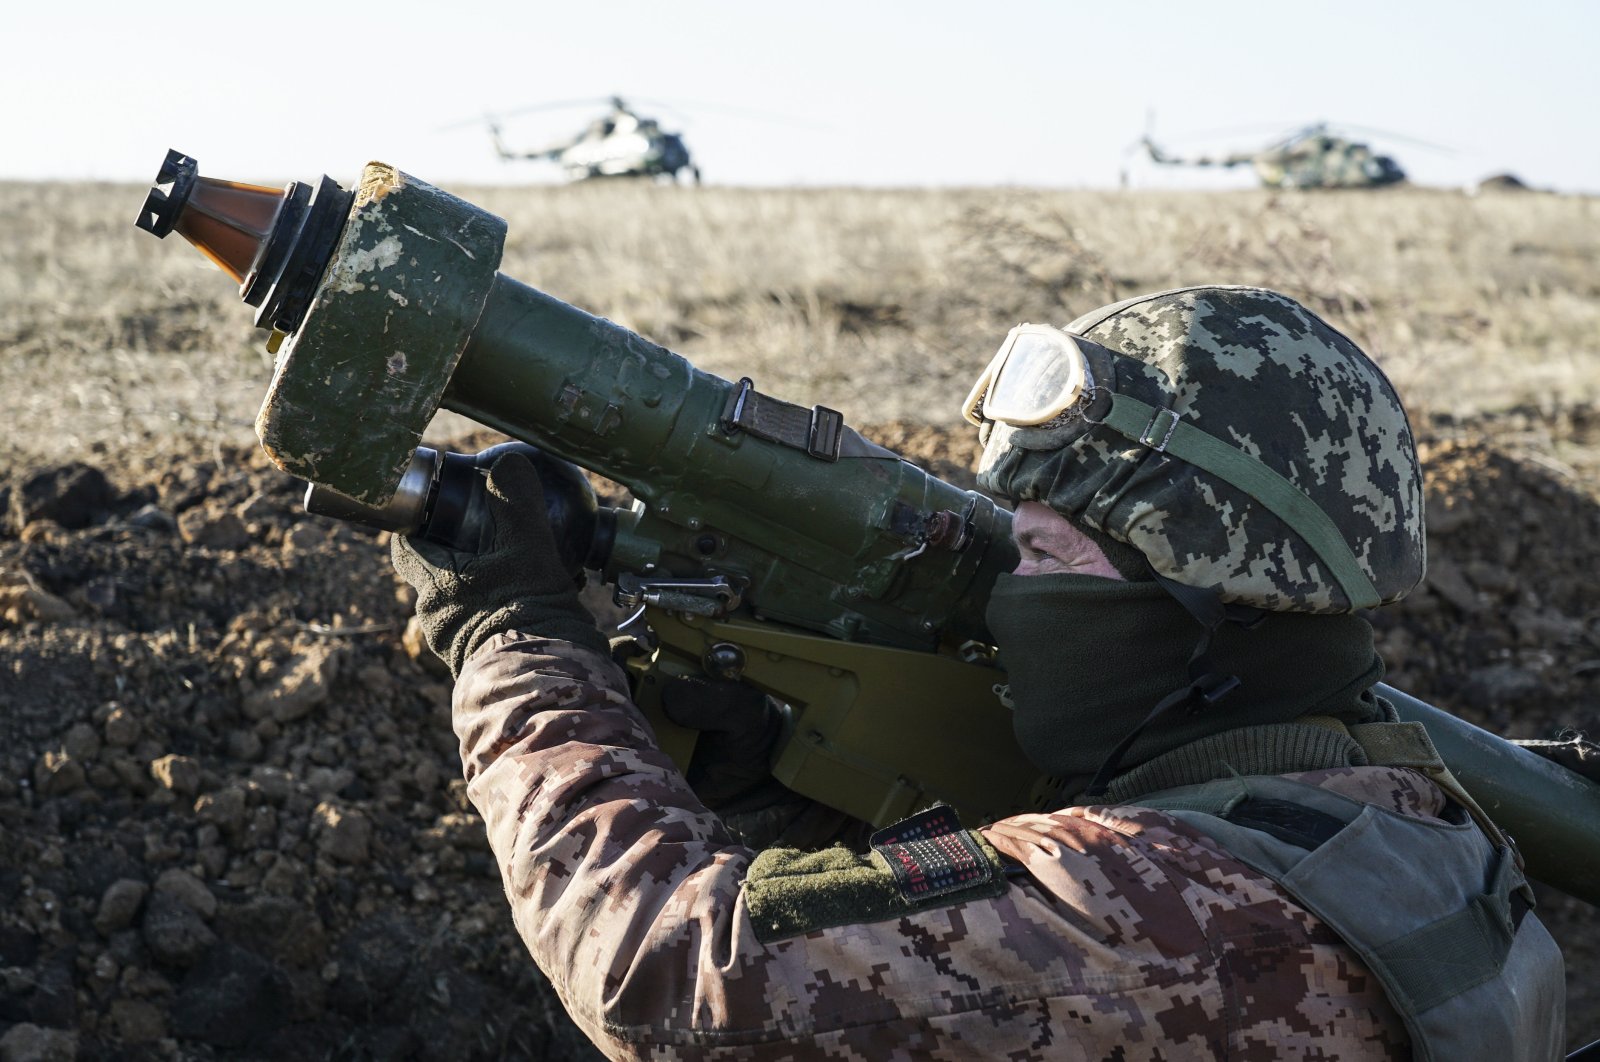 A Ukrainian soldier aims with an anti-aircraft rocker launcher during military exercises near Urzuf, south coast of Azov sea, eastern Ukraine, Nov. 29, 2018. (AP Photo)